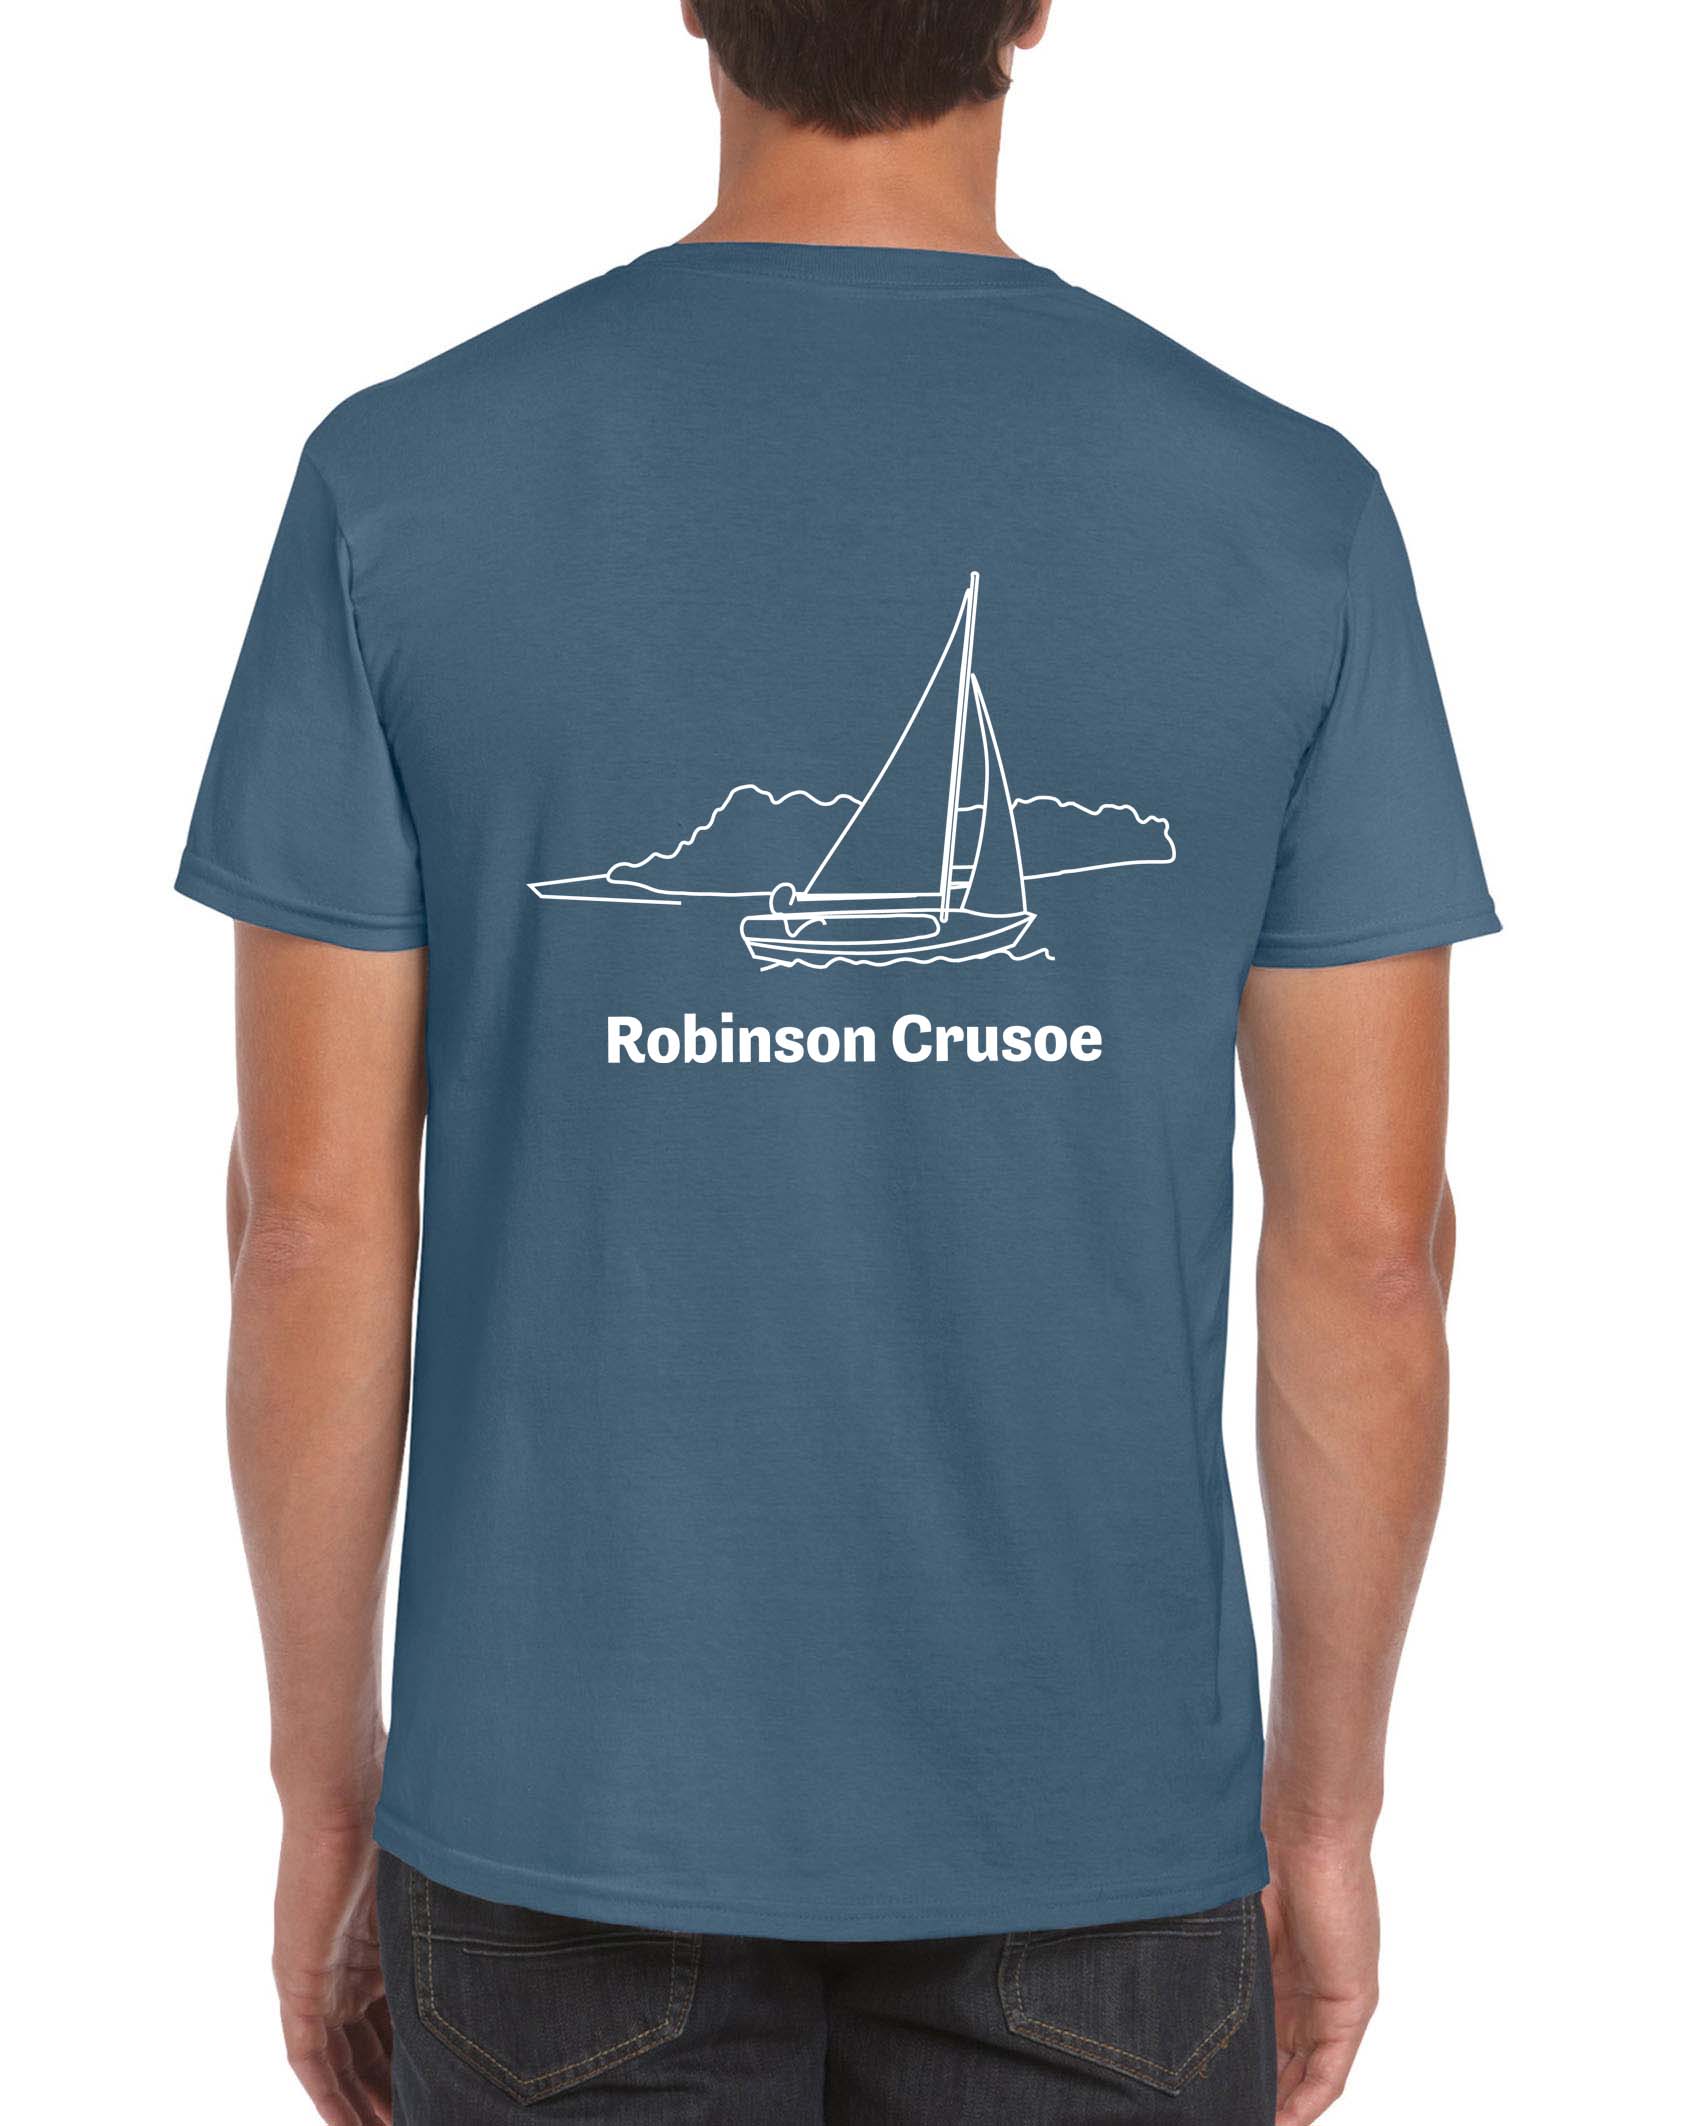 T-shirt Robinson Crusoe - Indigo blue - achterzijde